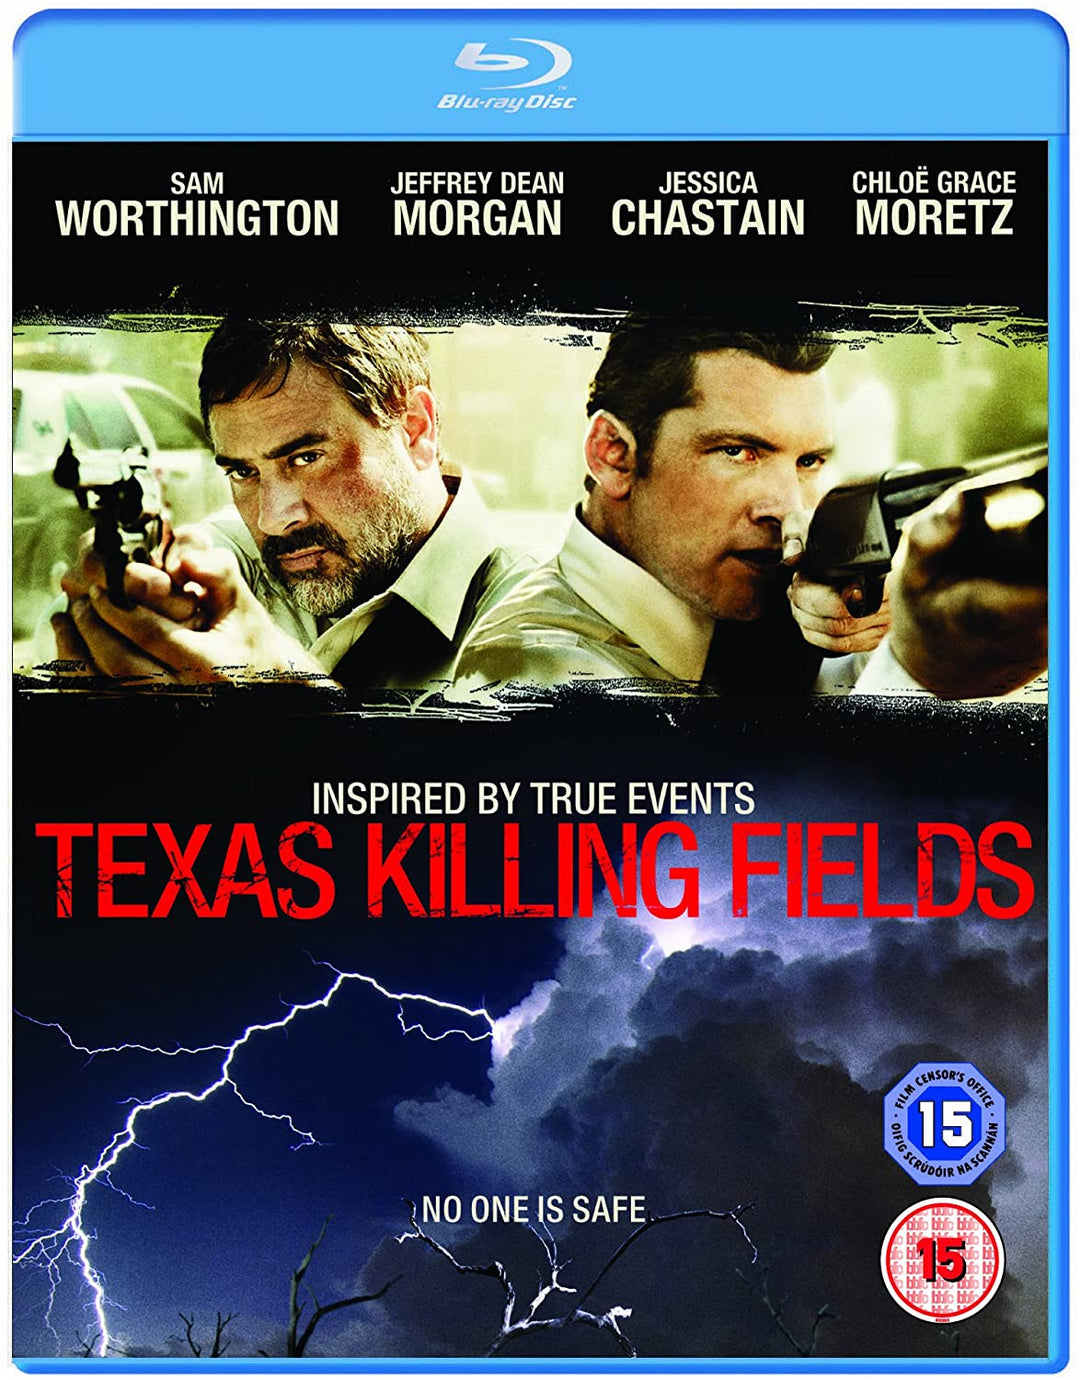 Texas Killing Fields - Crime/Thriller [Blu-Ray]